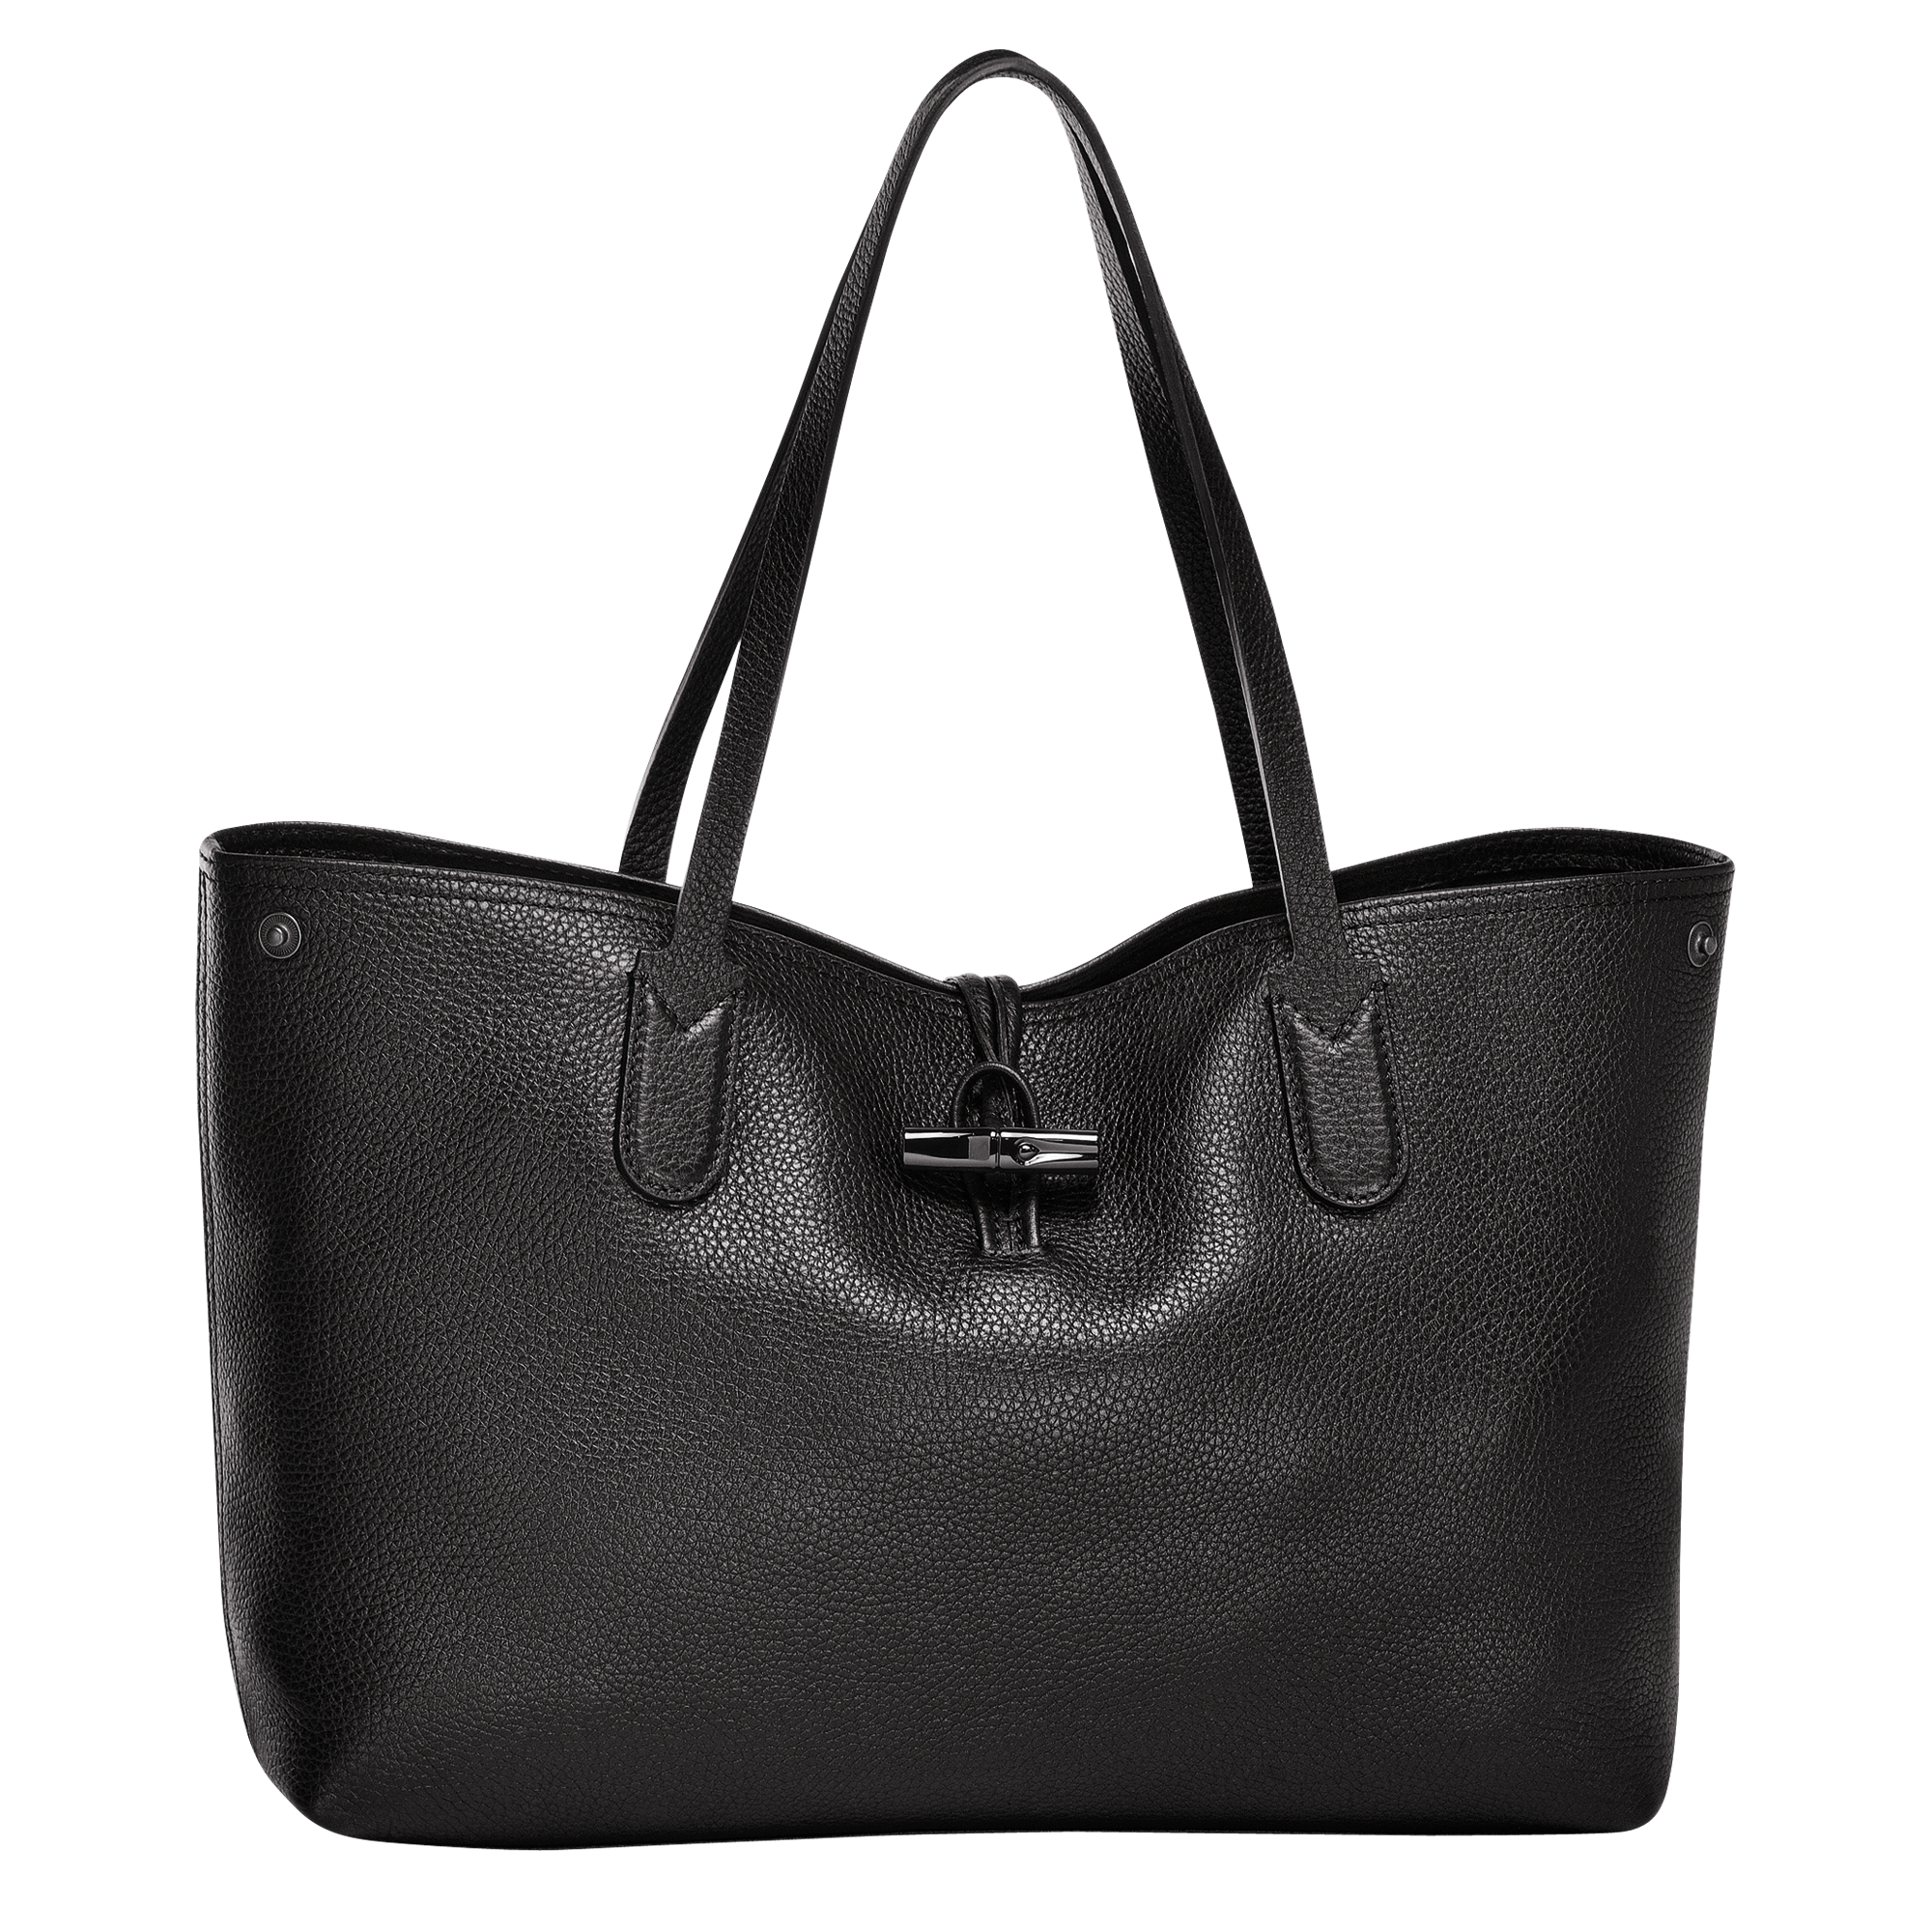 longchamp leather bag